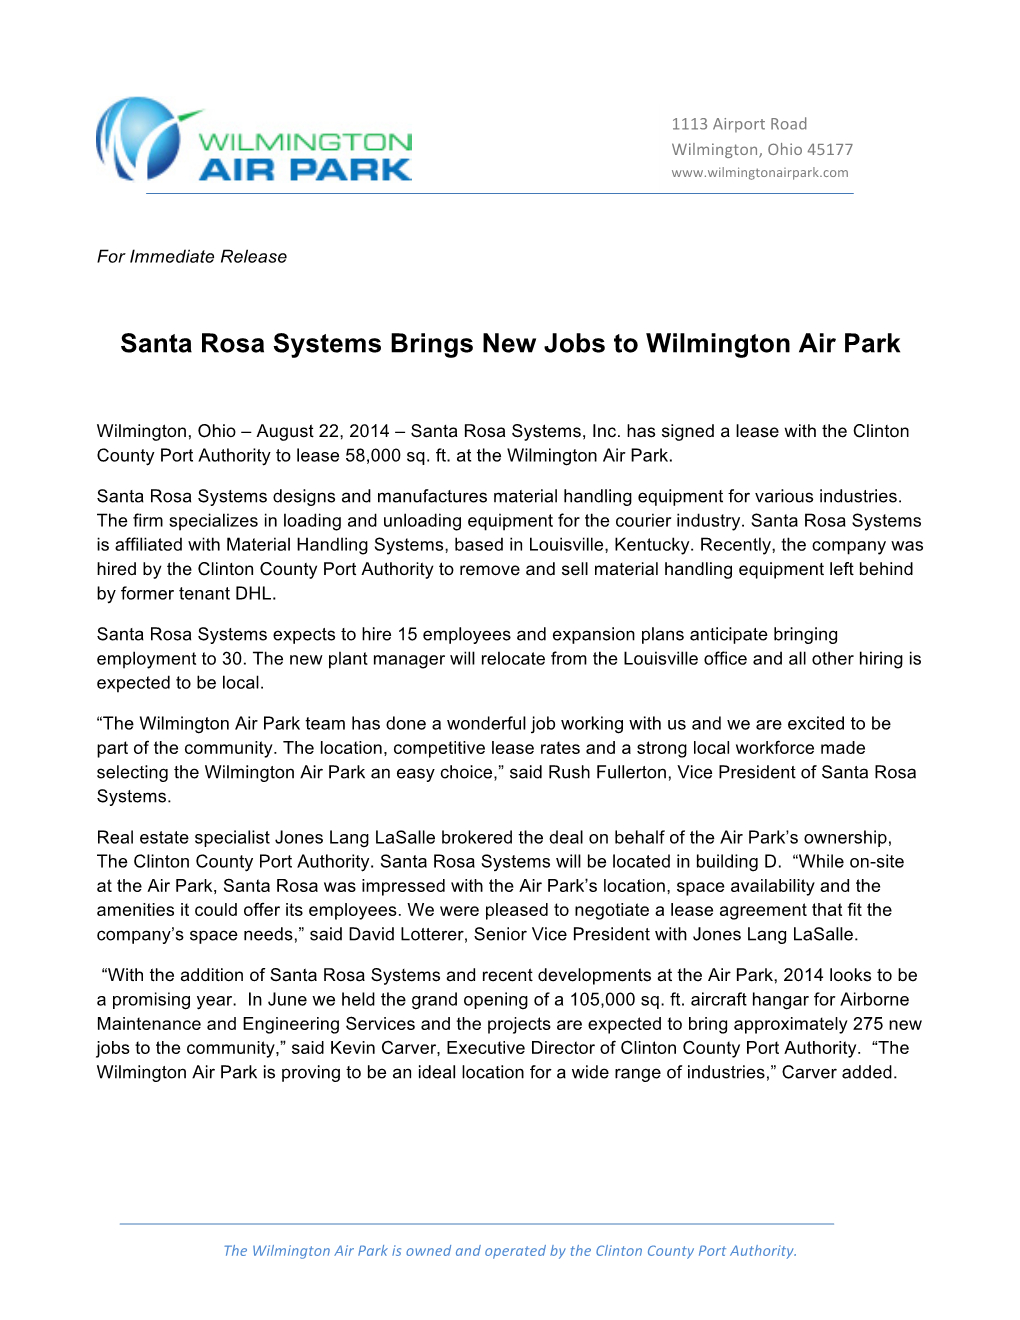 Santa Rosa Systems Brings New Jobs to Wilmington Air Park